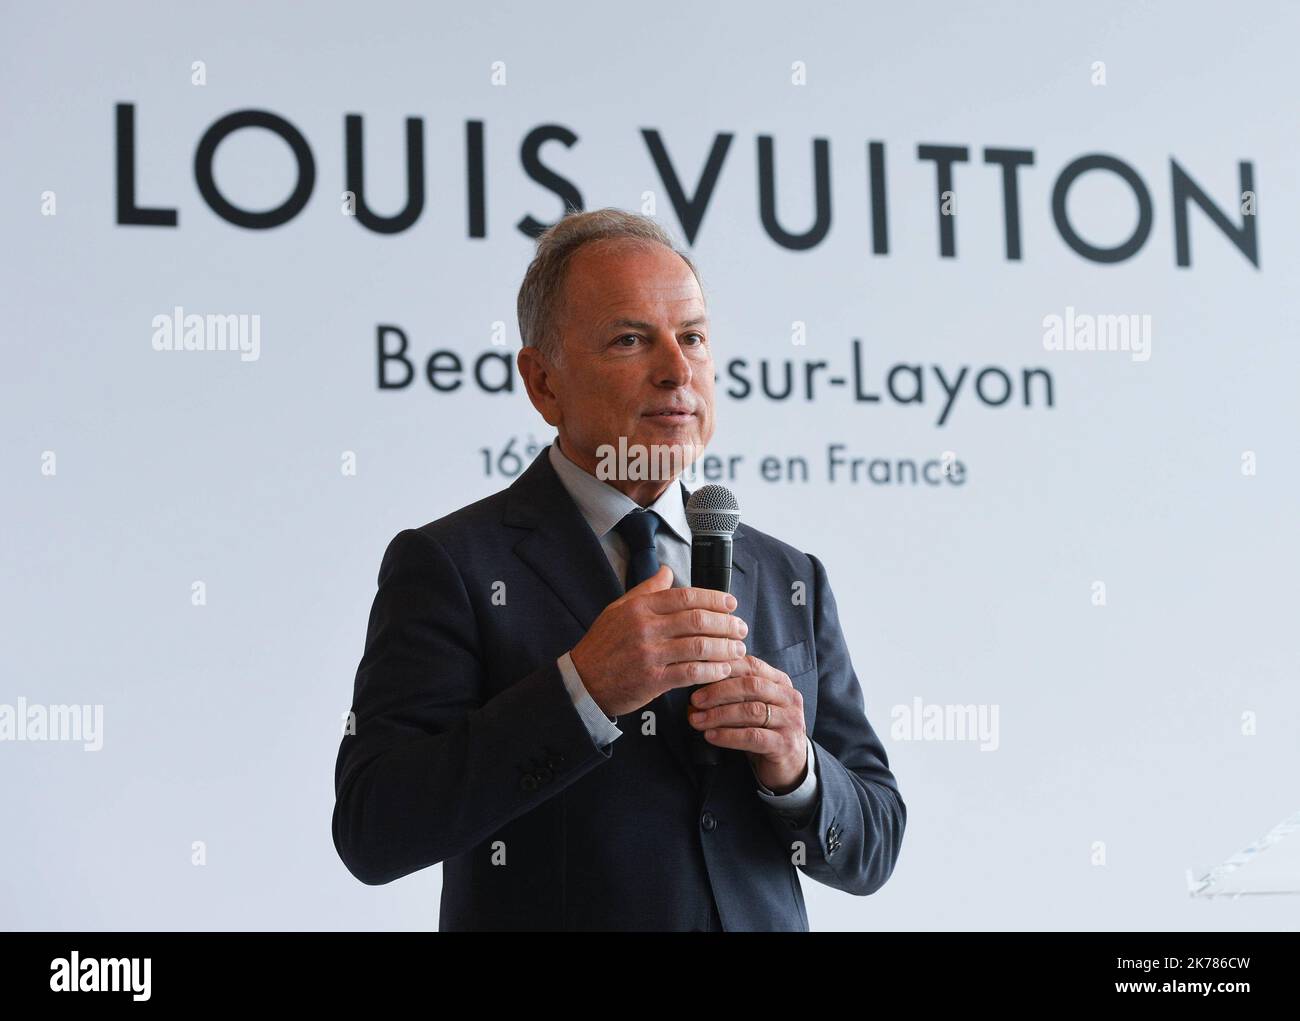 Love these pictures via @gofutureny ❤️ #louisvuitton  #louisvuittoninternational